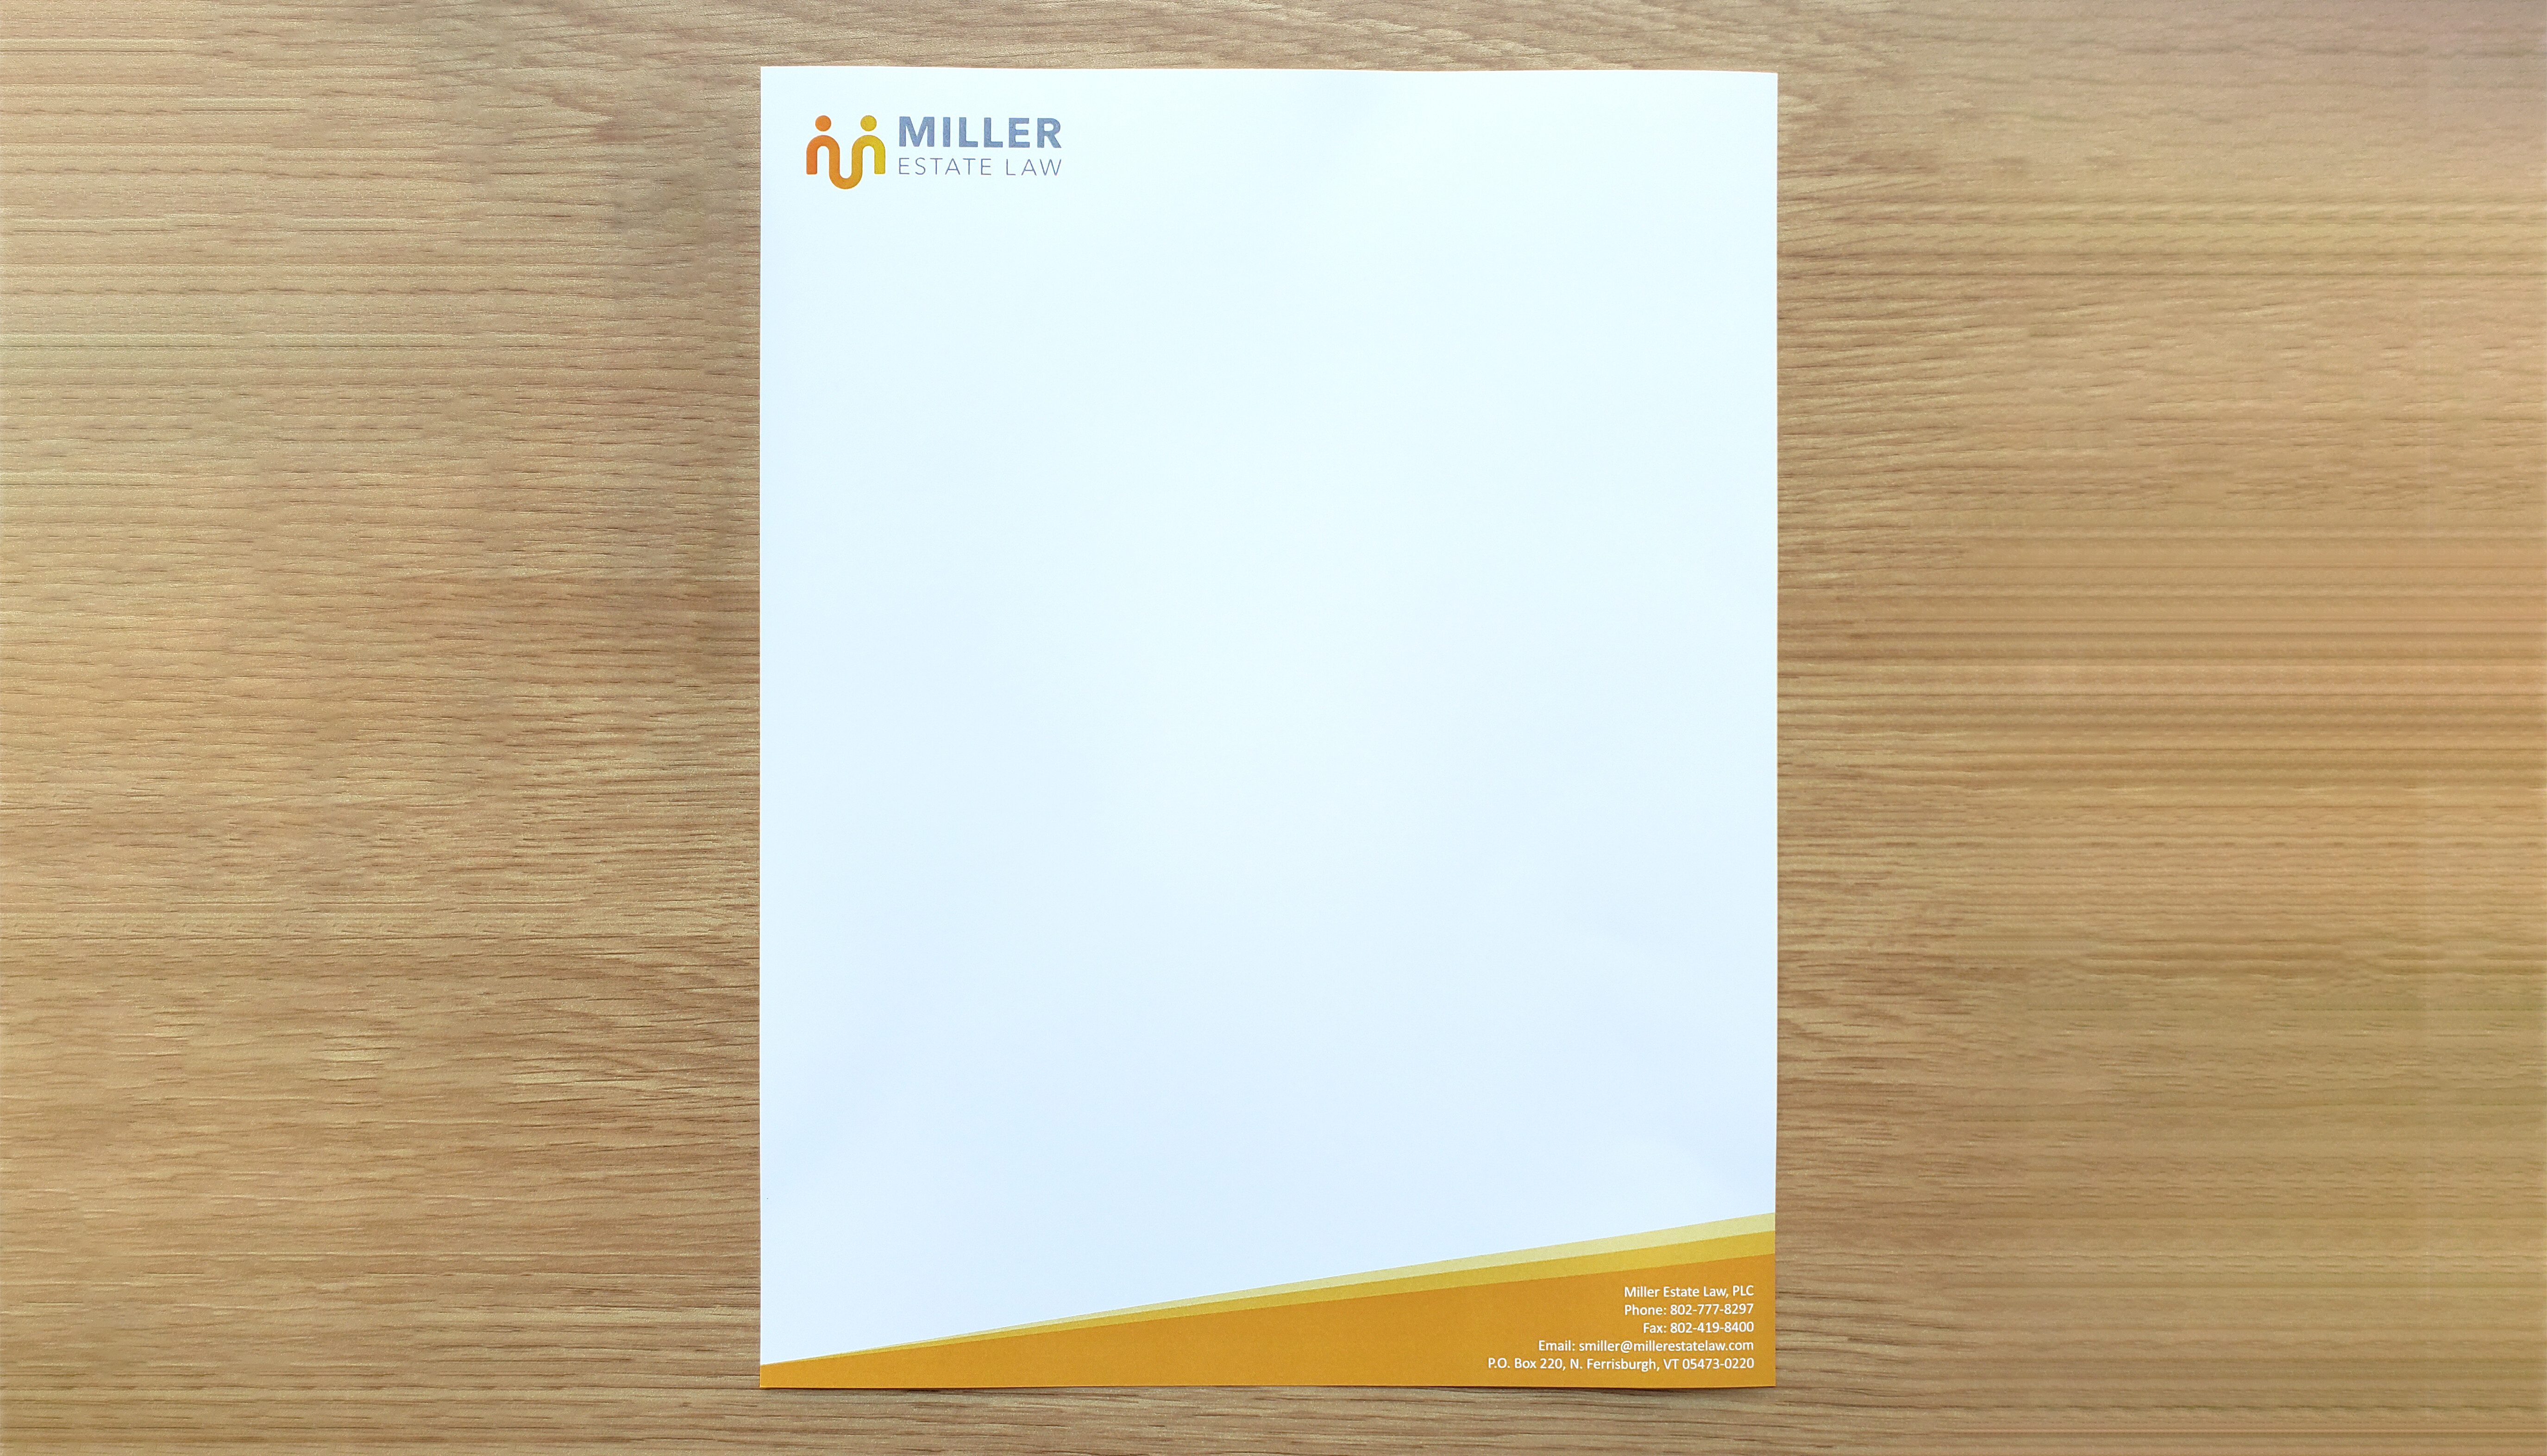 Printed Presentation Folders for Amethyst Captive Insurance Solutions